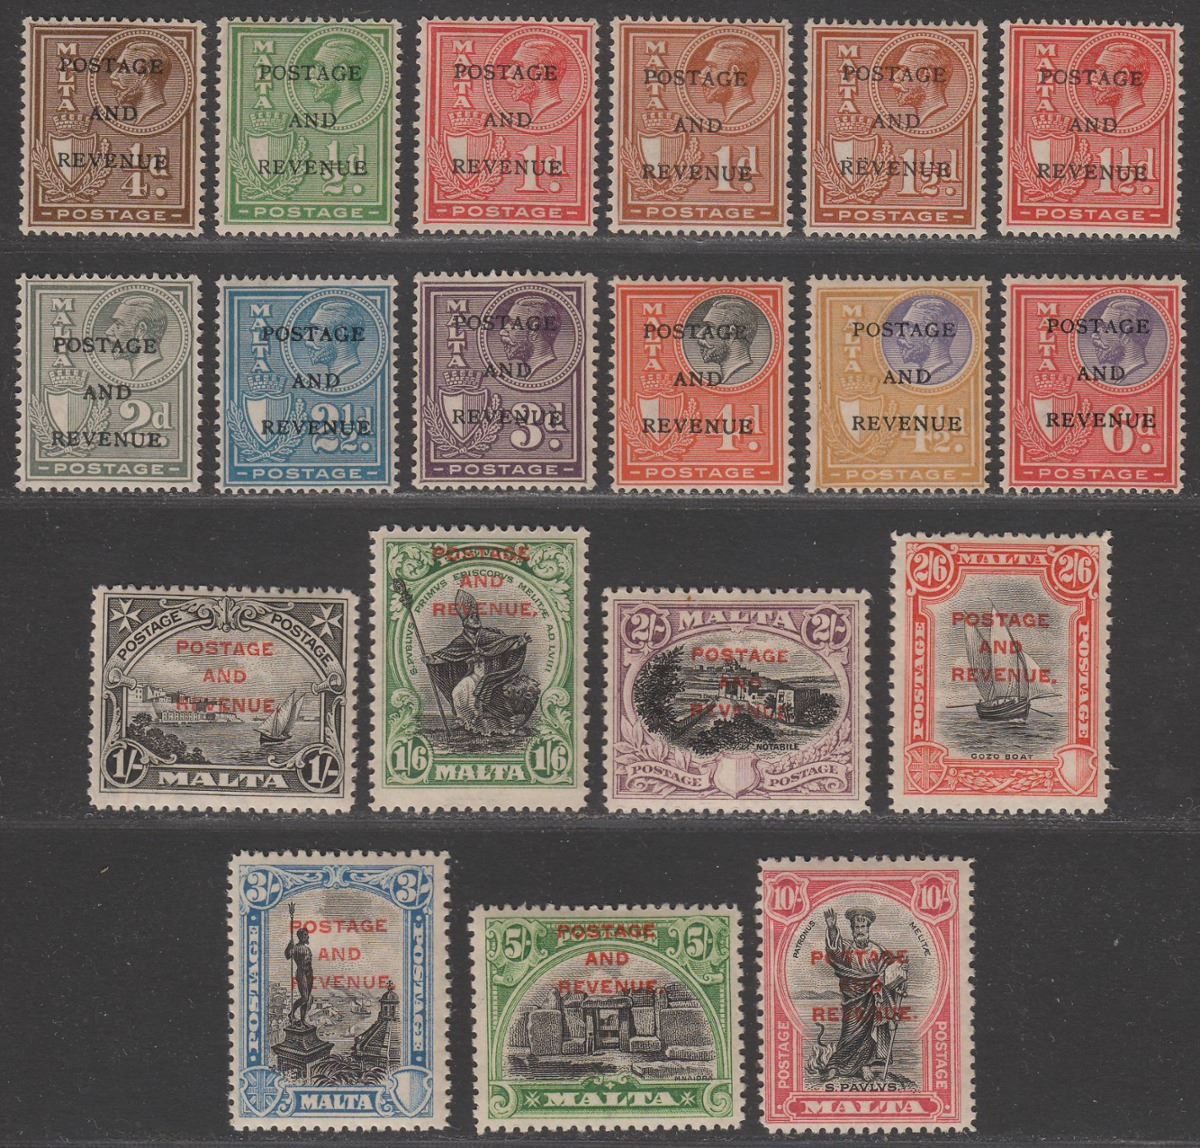 Malta 1928 KGV Postage and Revenue Overprint Set SG174-192 cat £200 toned gum